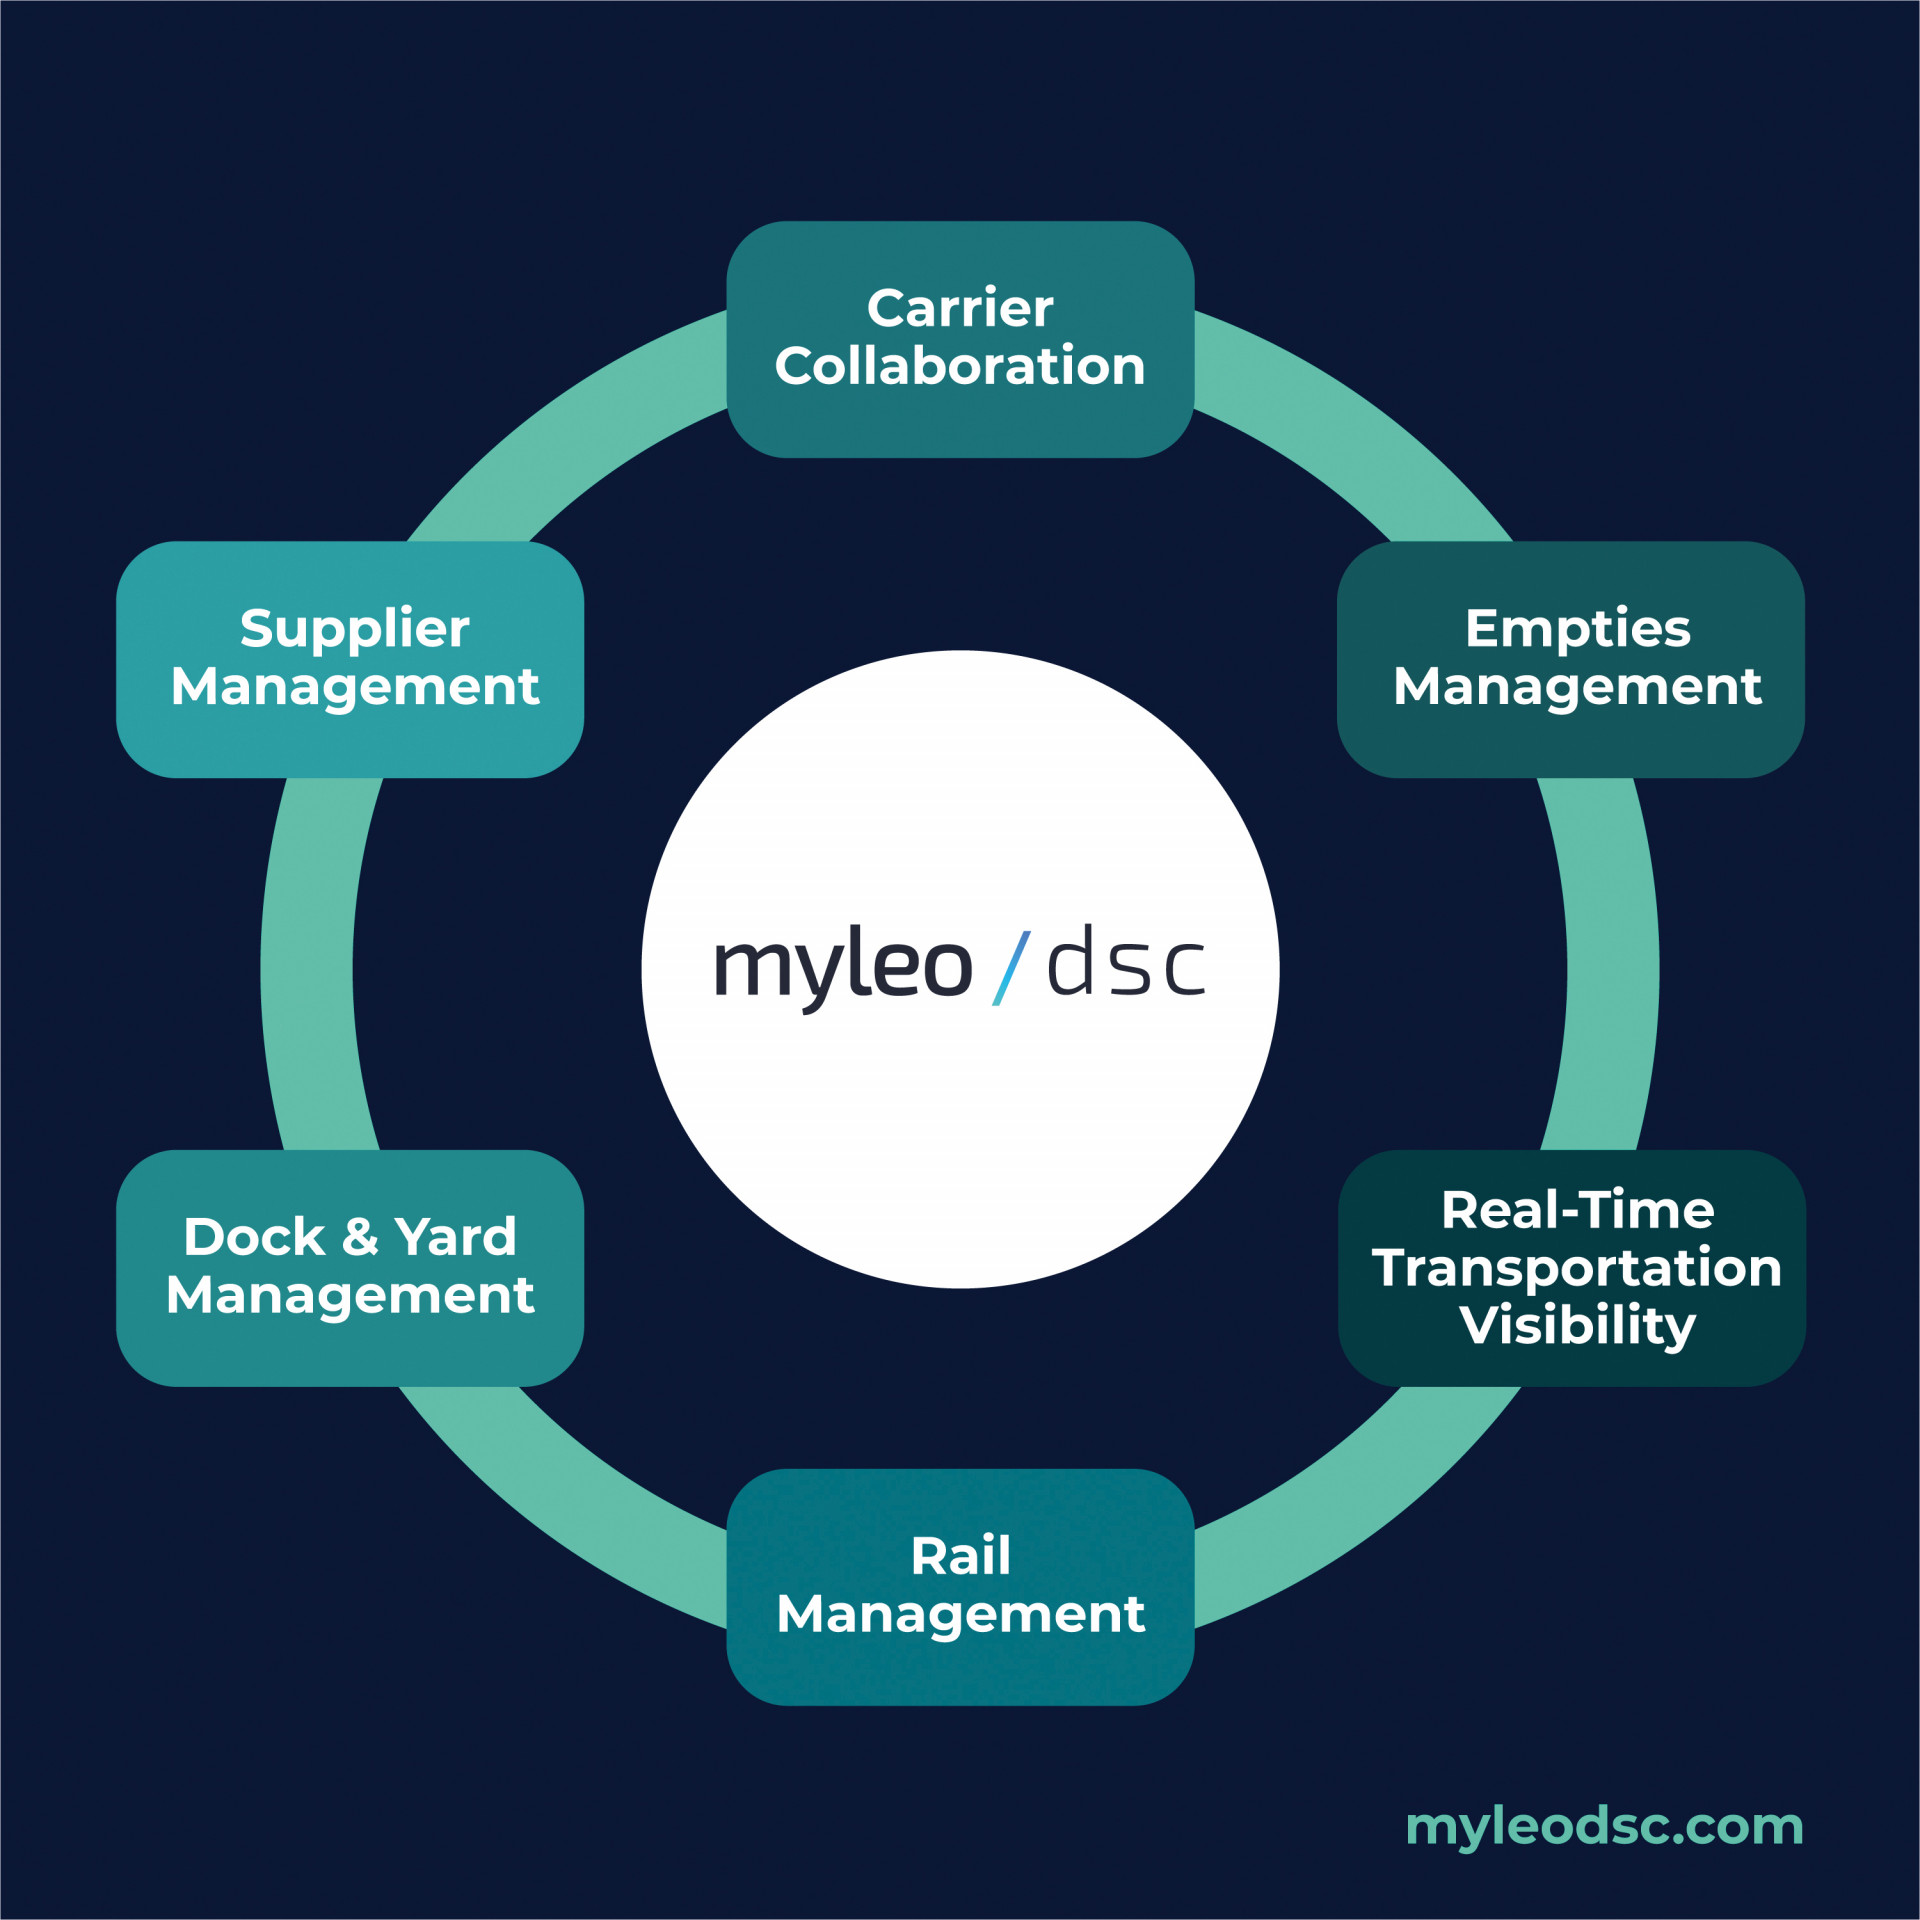 myleo / dsc Process Solutions